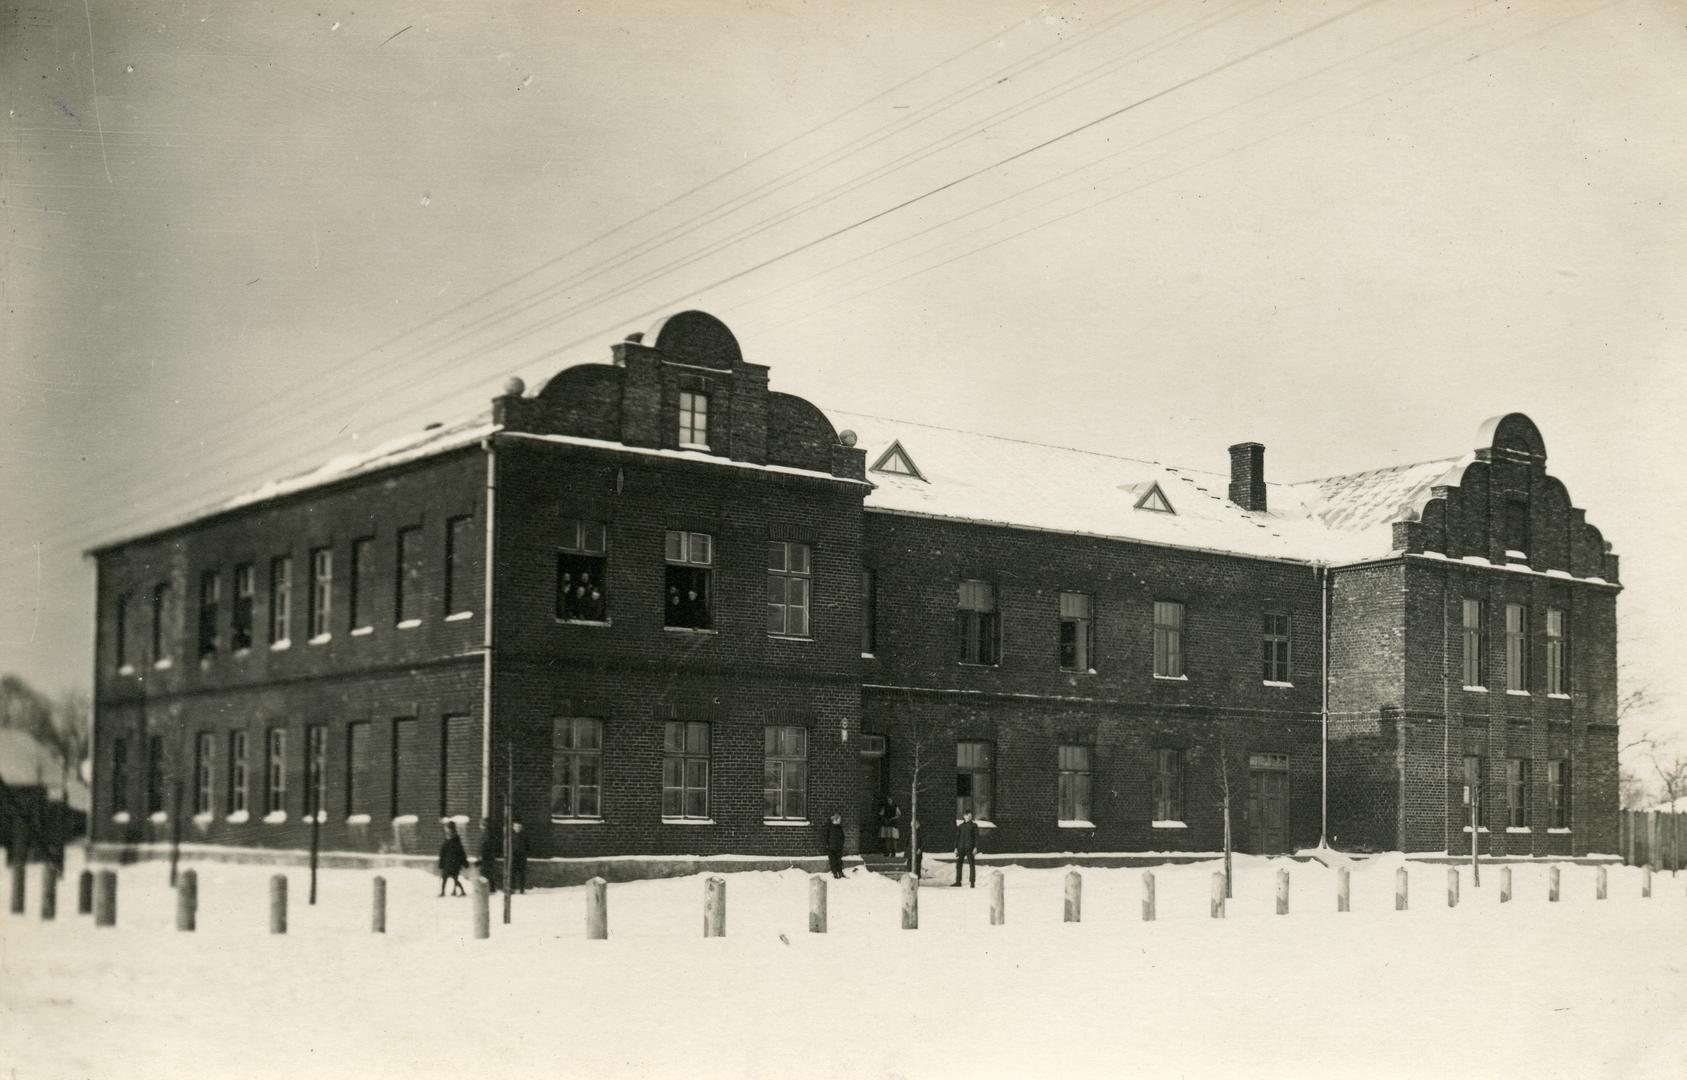 Pärnu City 2. Primary school building